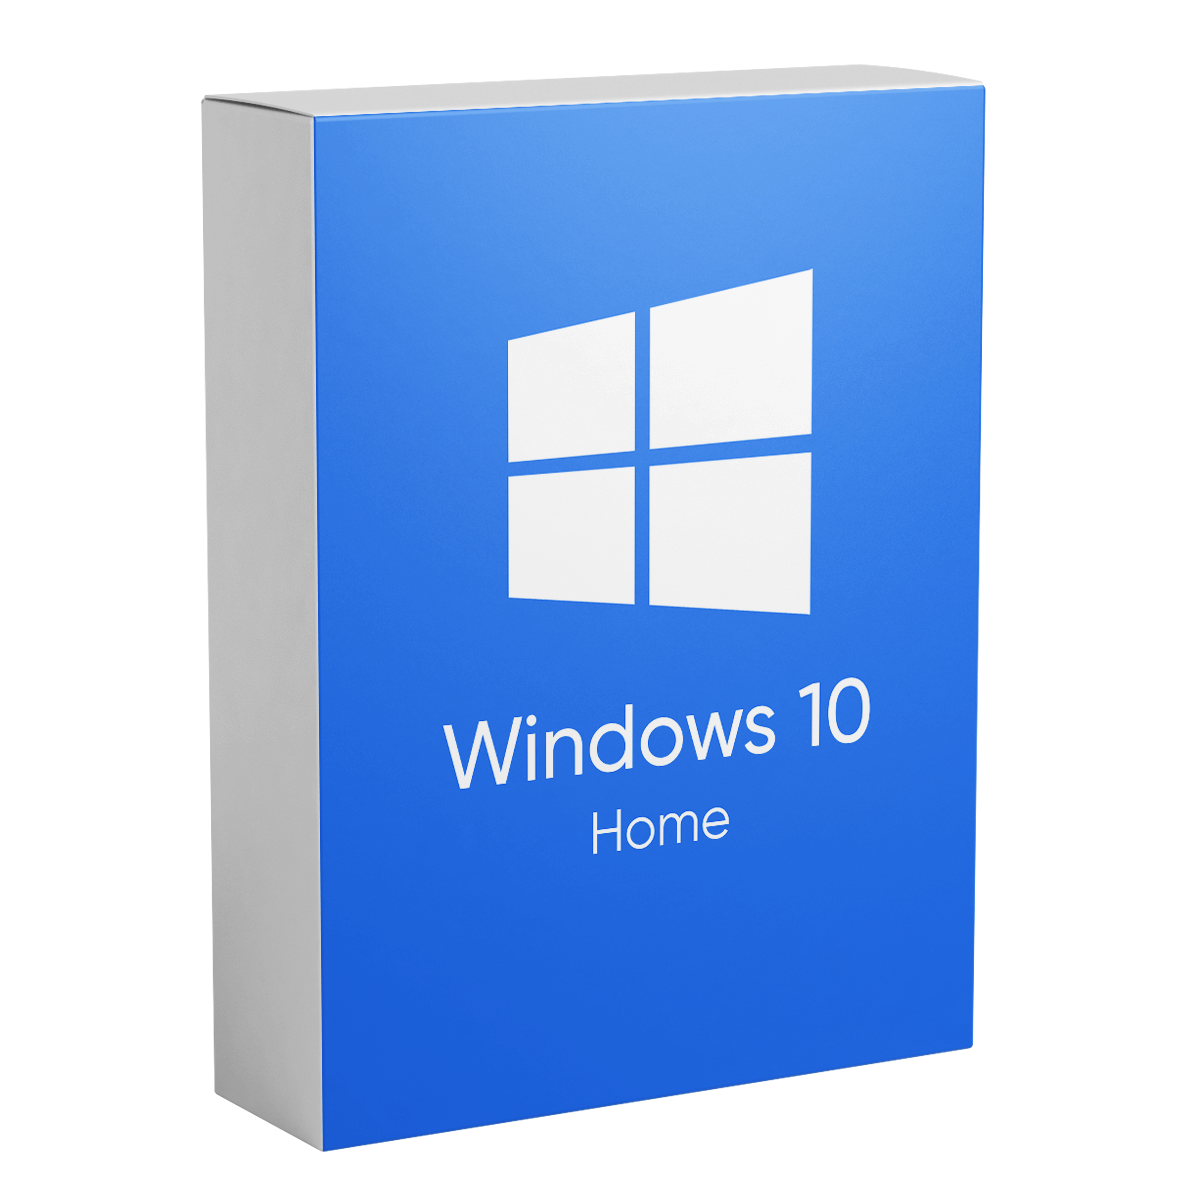 Windows 10 Home - Lifetime License for 1 PC